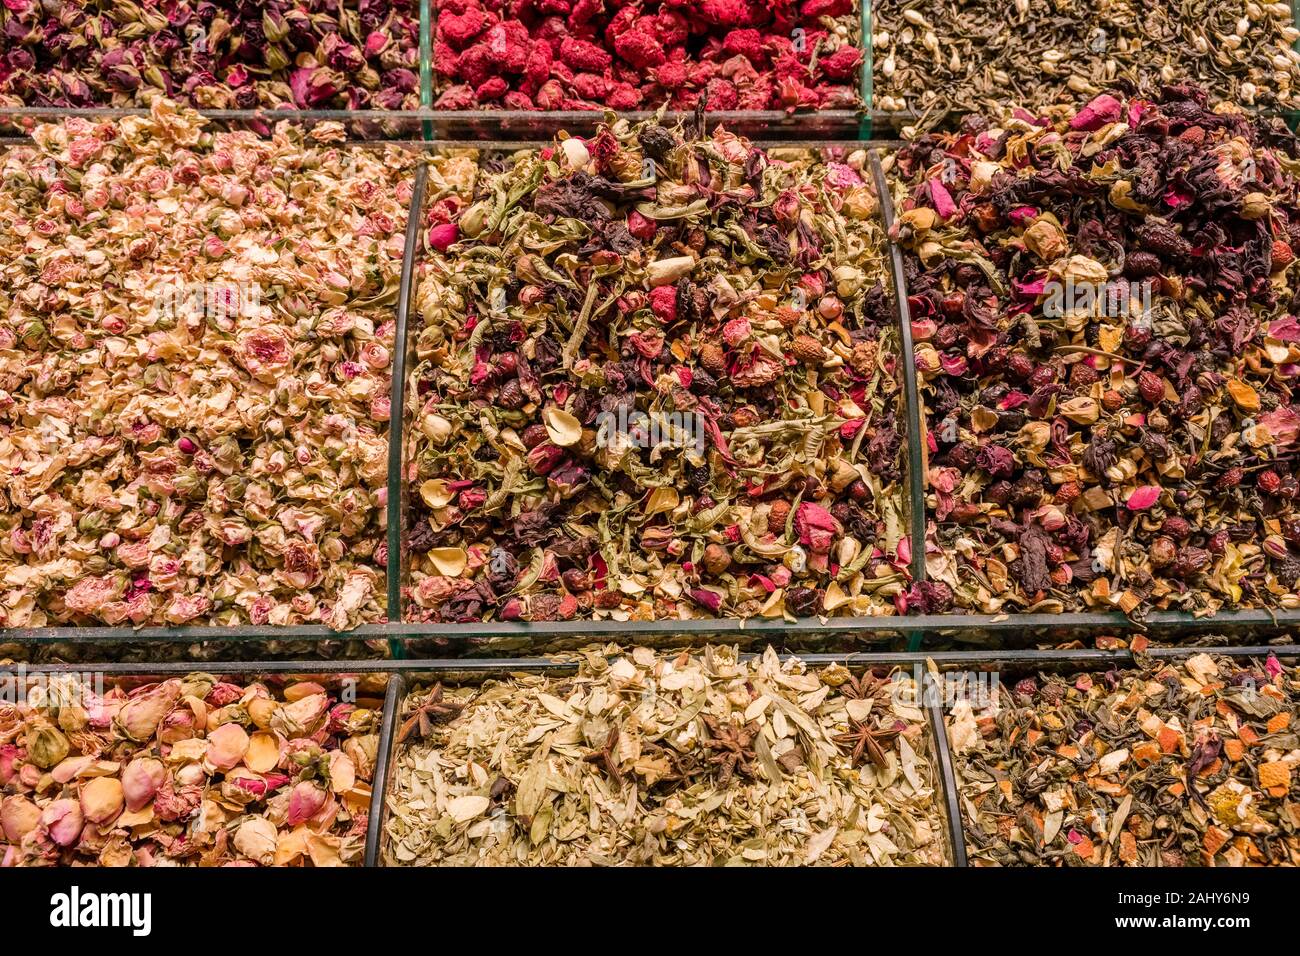 Big variety of different teas are offered for sale inside the Spice Bazaar, Mısır Çarşısı, also known as Egyptian Bazaar Stock Photo